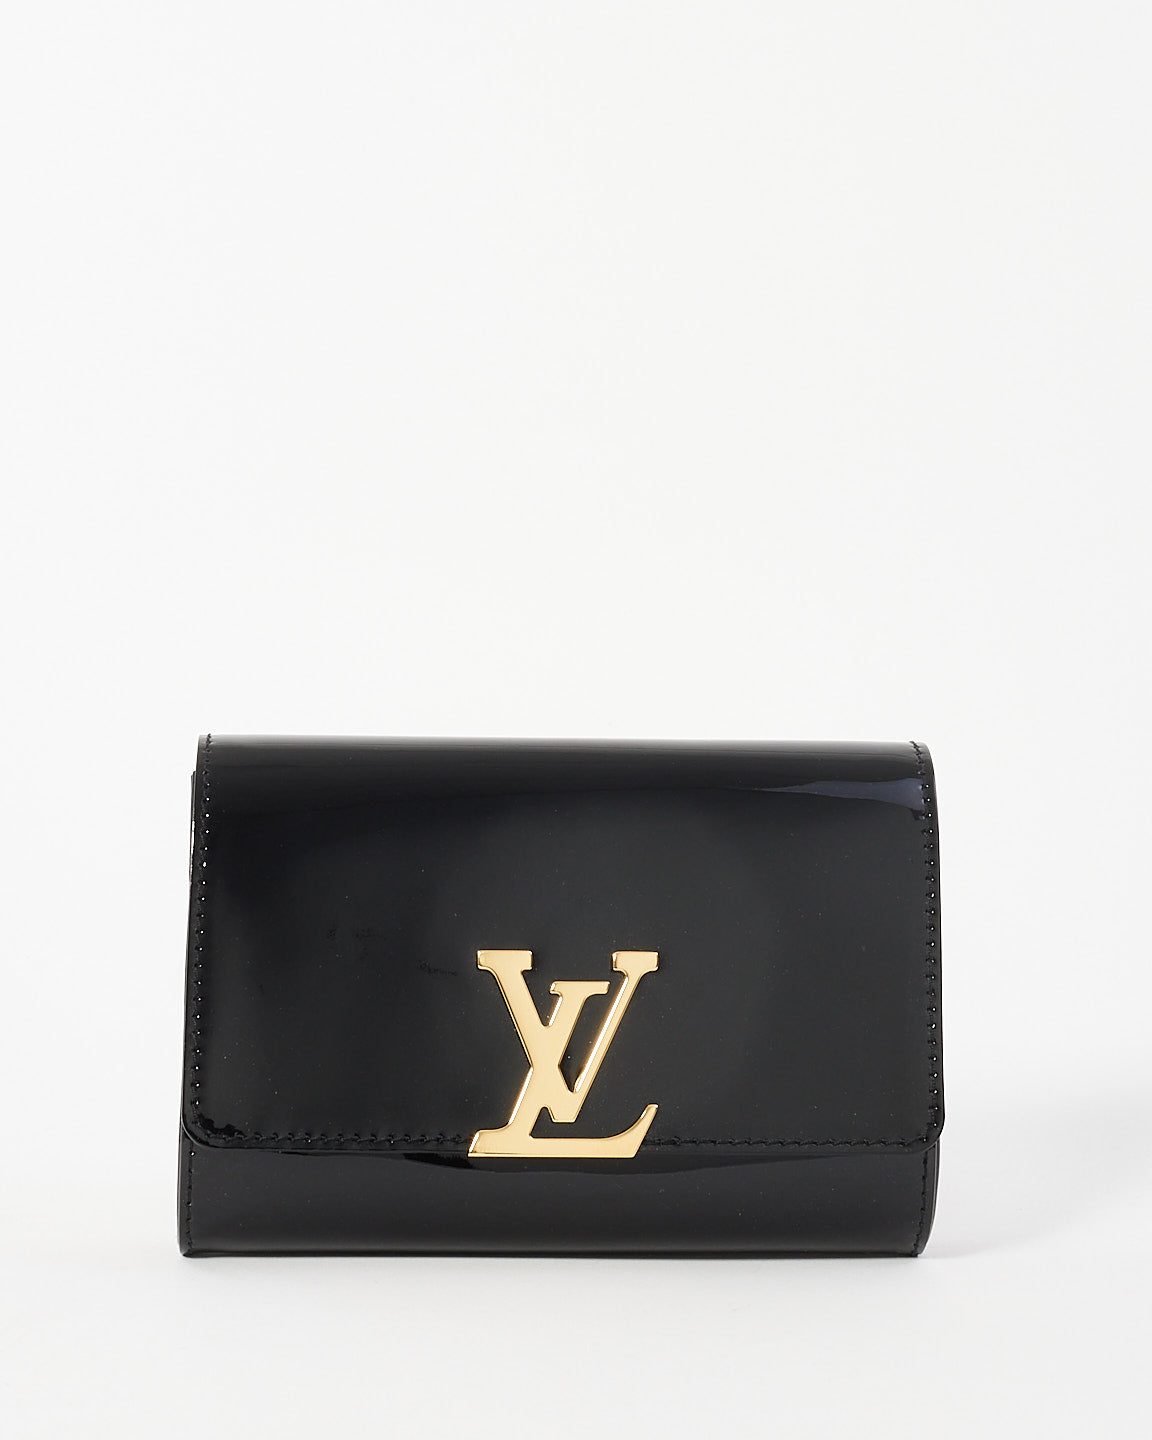 Louis Vuitton Black Patent Leather Chain Louise PM Bag